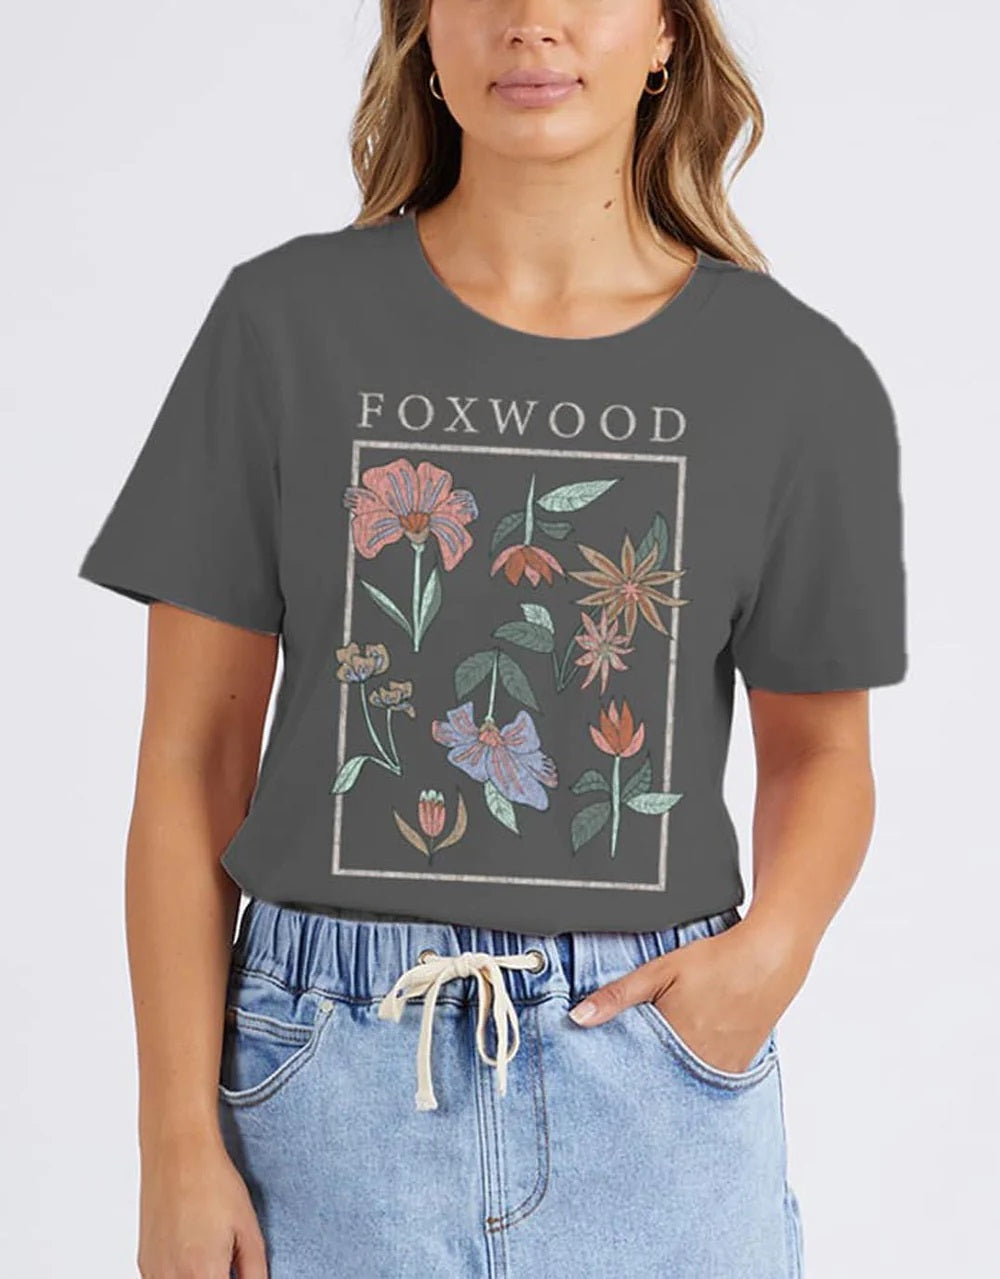 Foxwood Wild Flower Tee